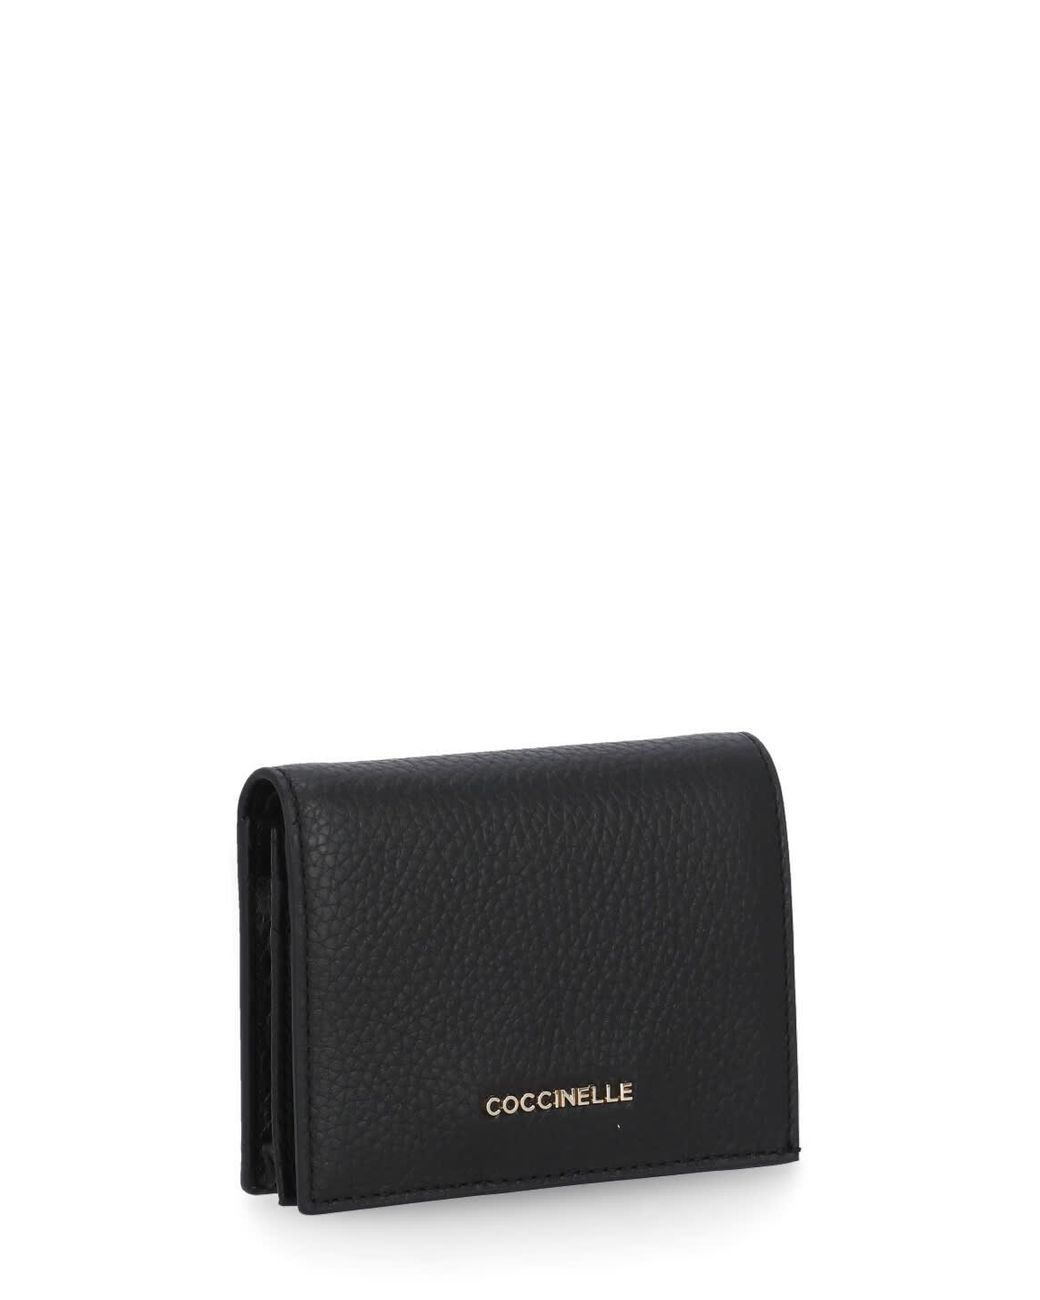 Coccinelle Metallic Soft Wallet in Gray | Lyst